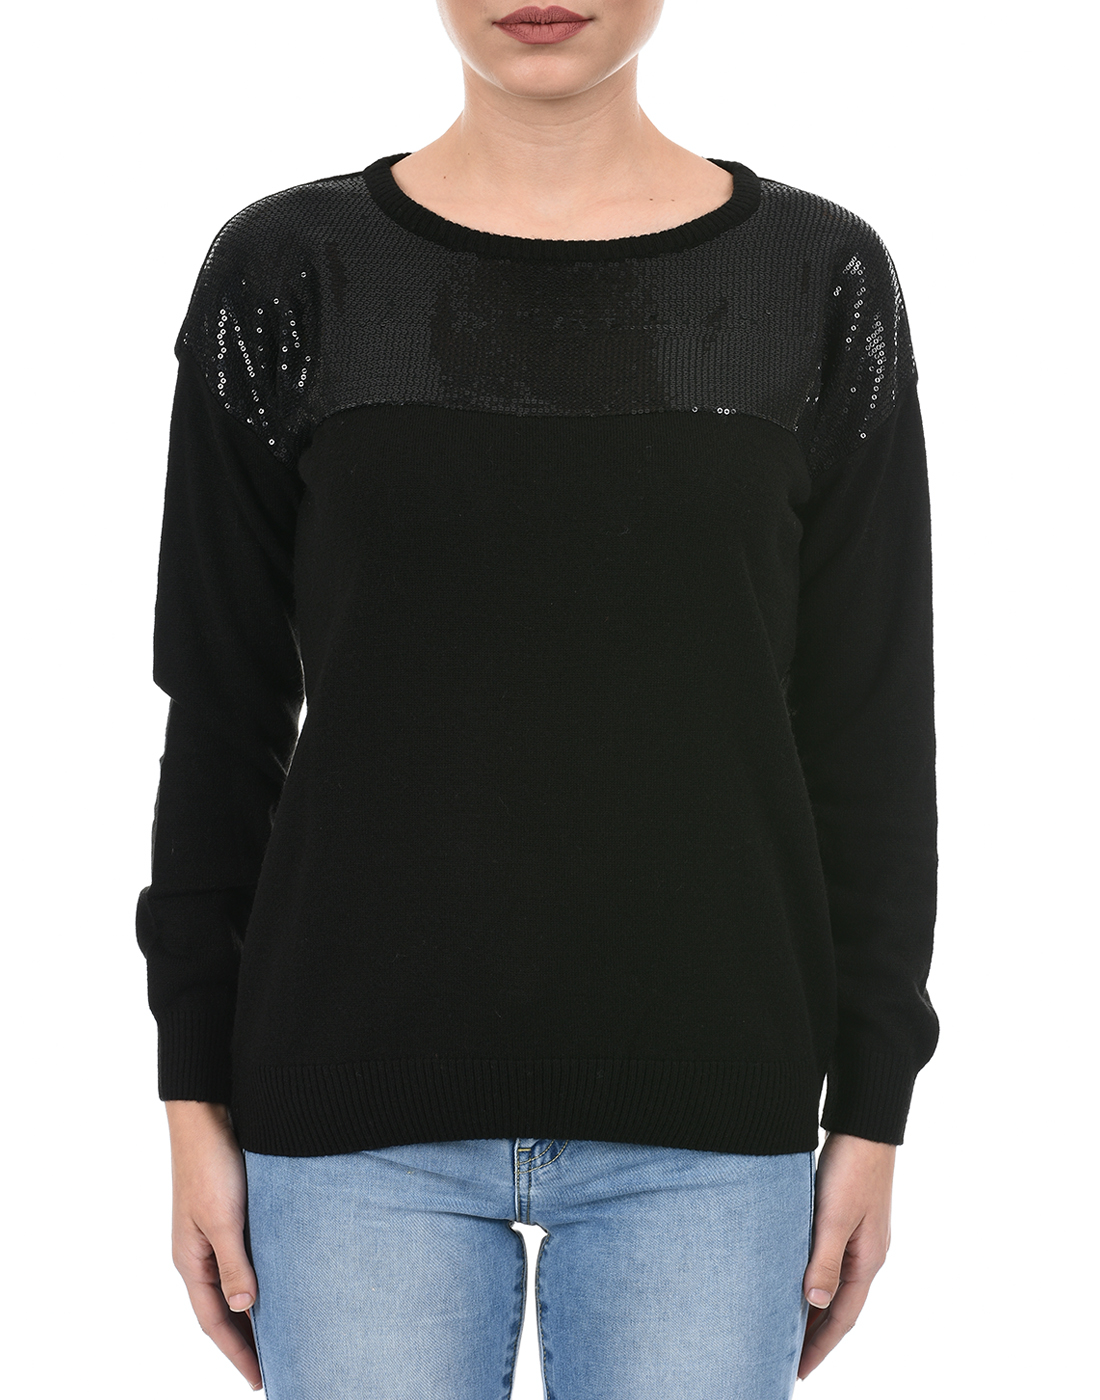 Species Women Black Embellished Sweater